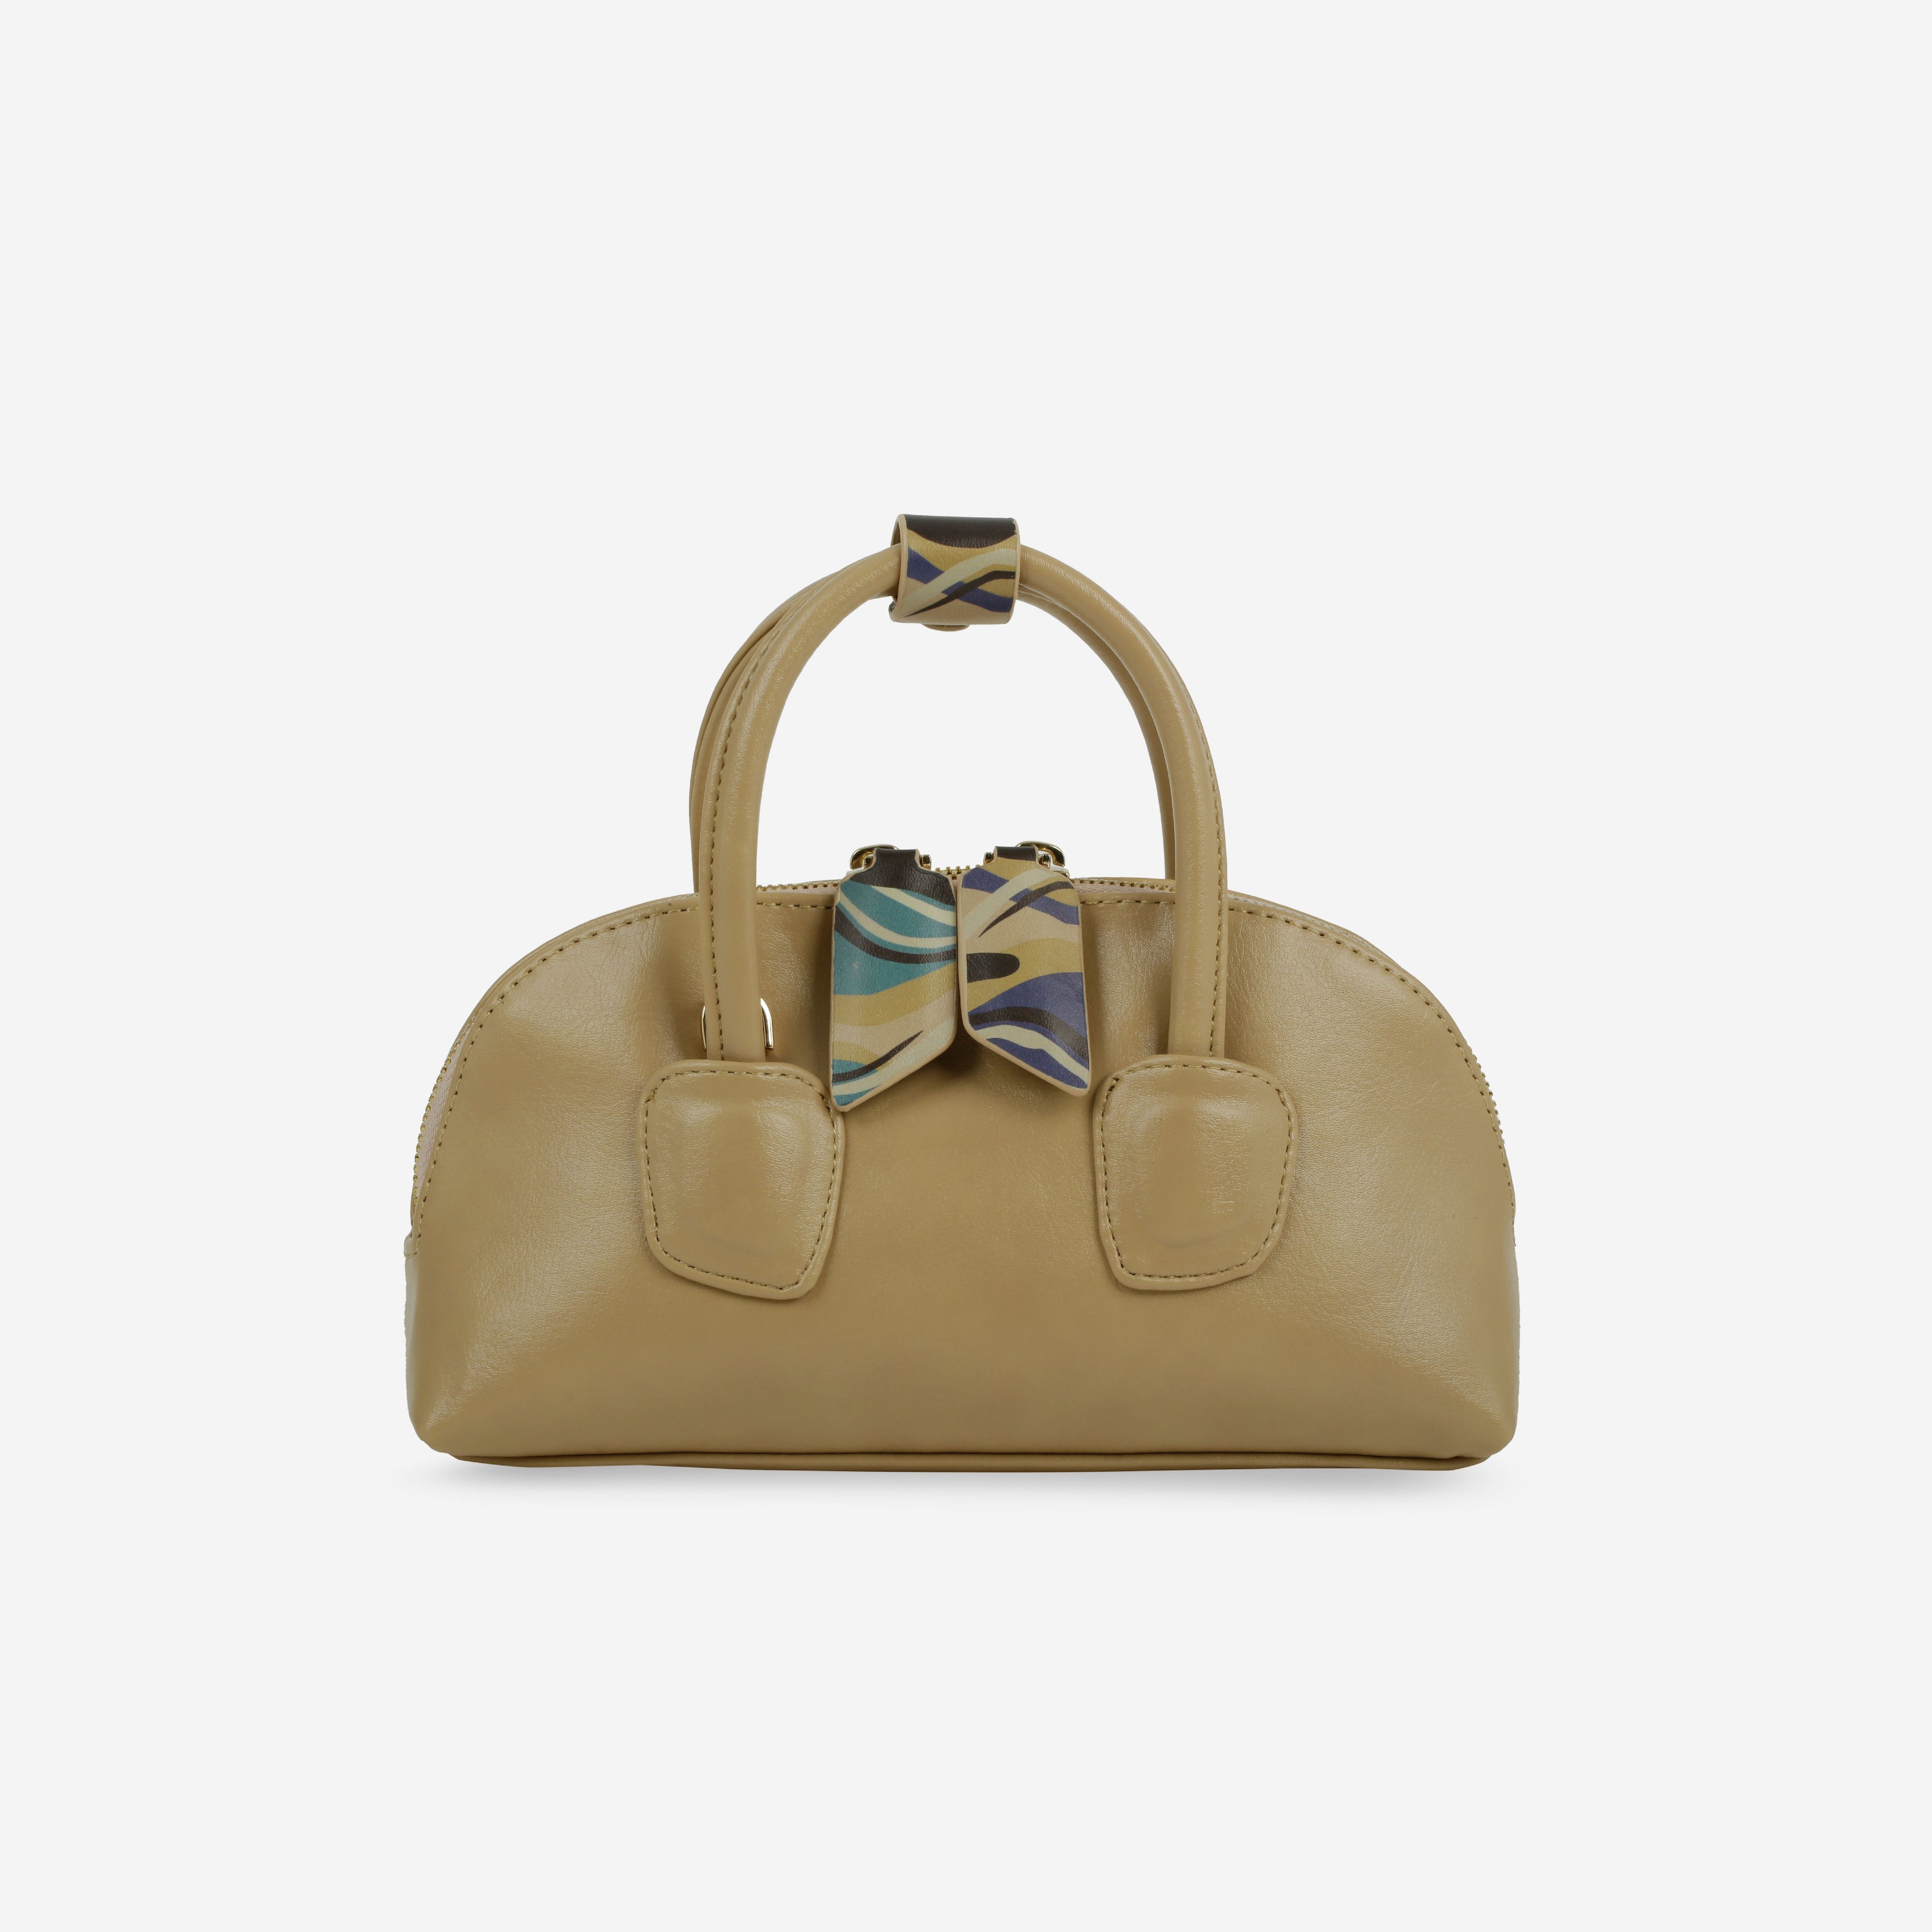 TACOS handbag beige color small size (S)